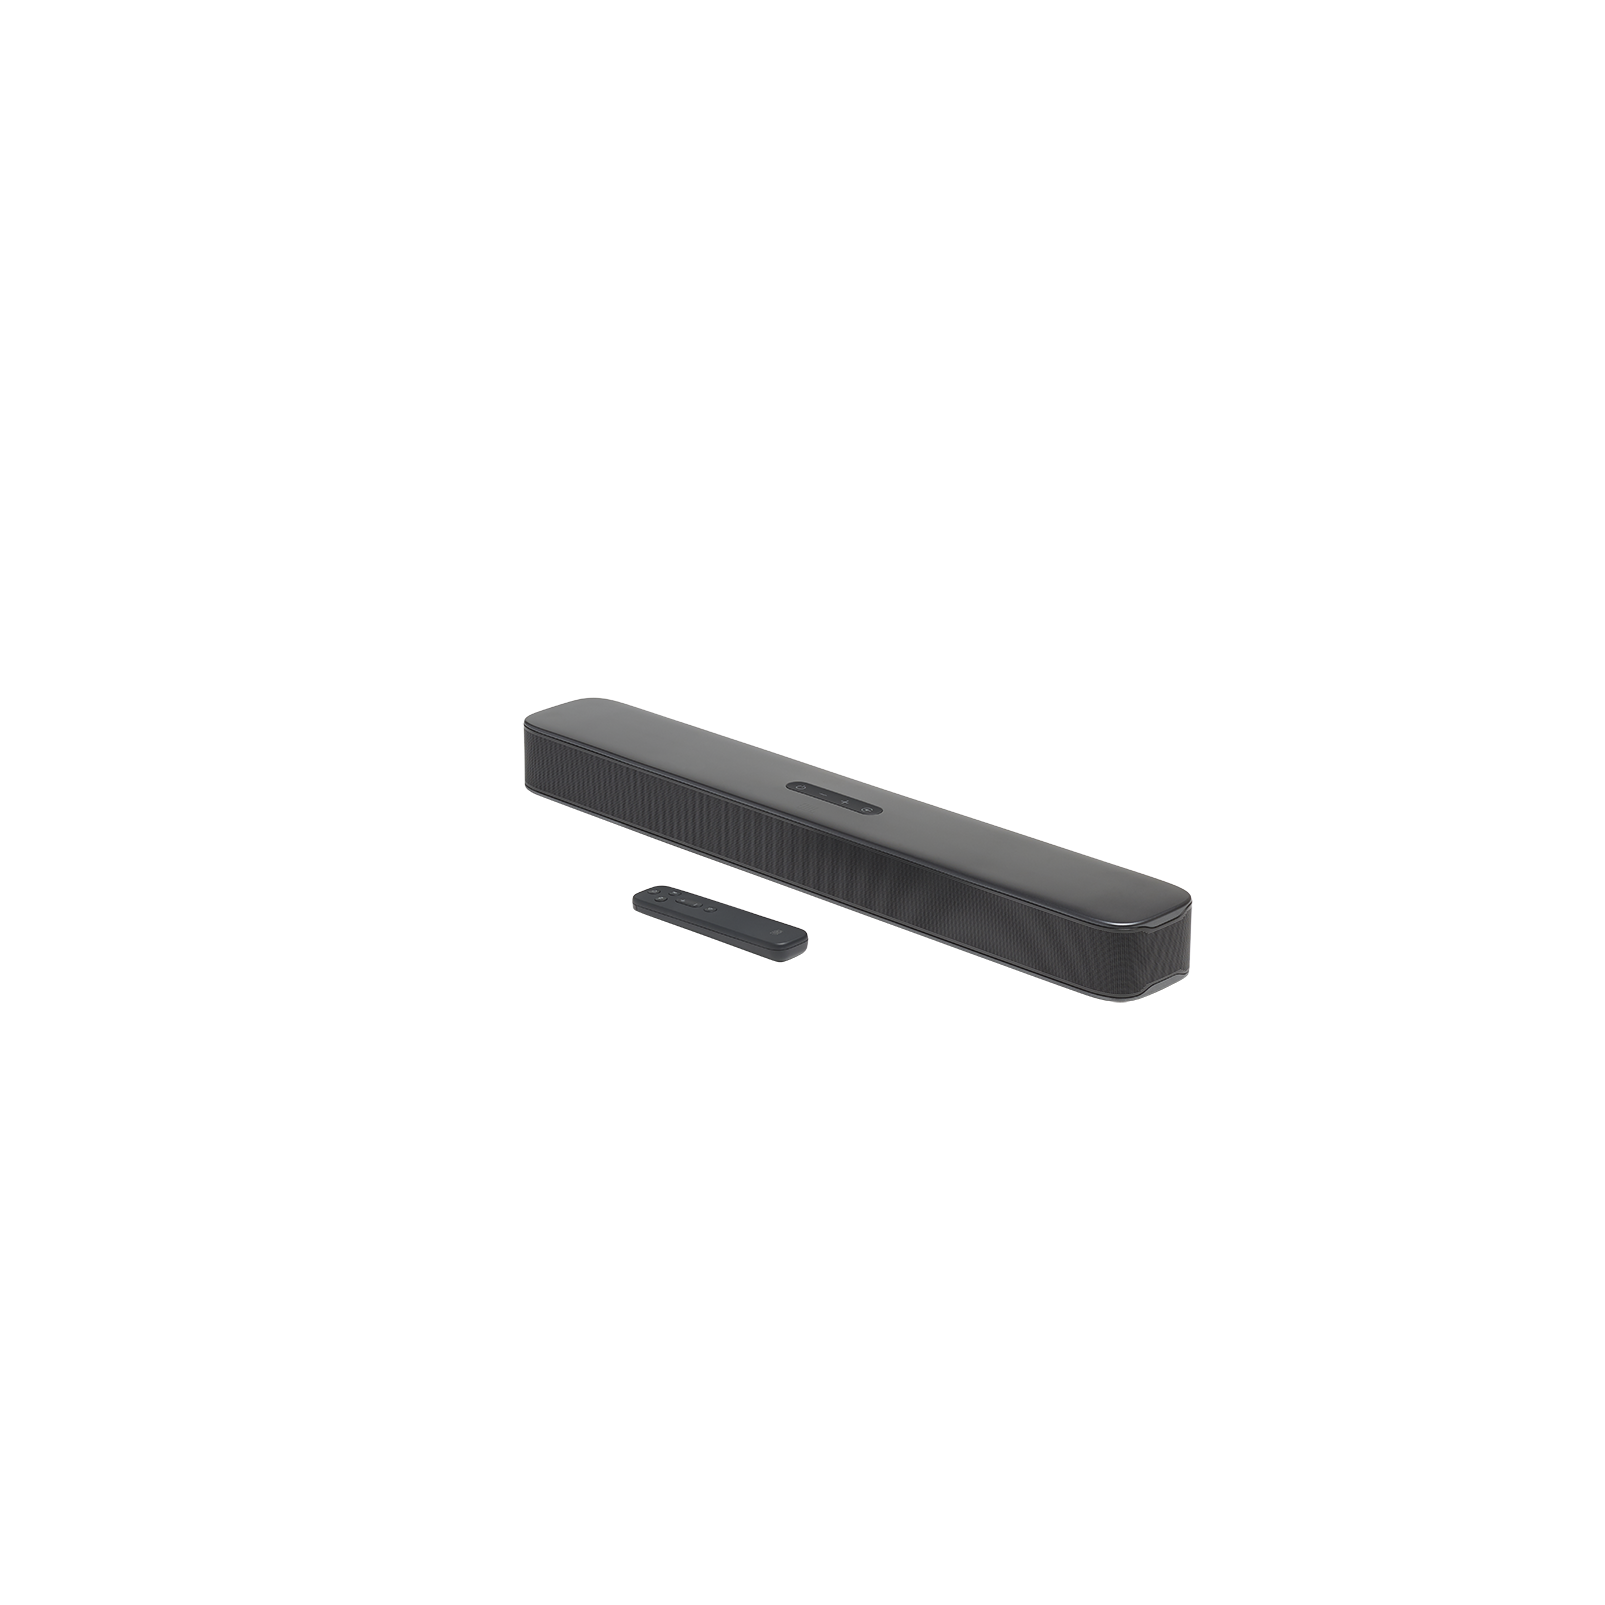 JBL Bar 2.0 All-in-One | Compact 2.0 channel soundbar